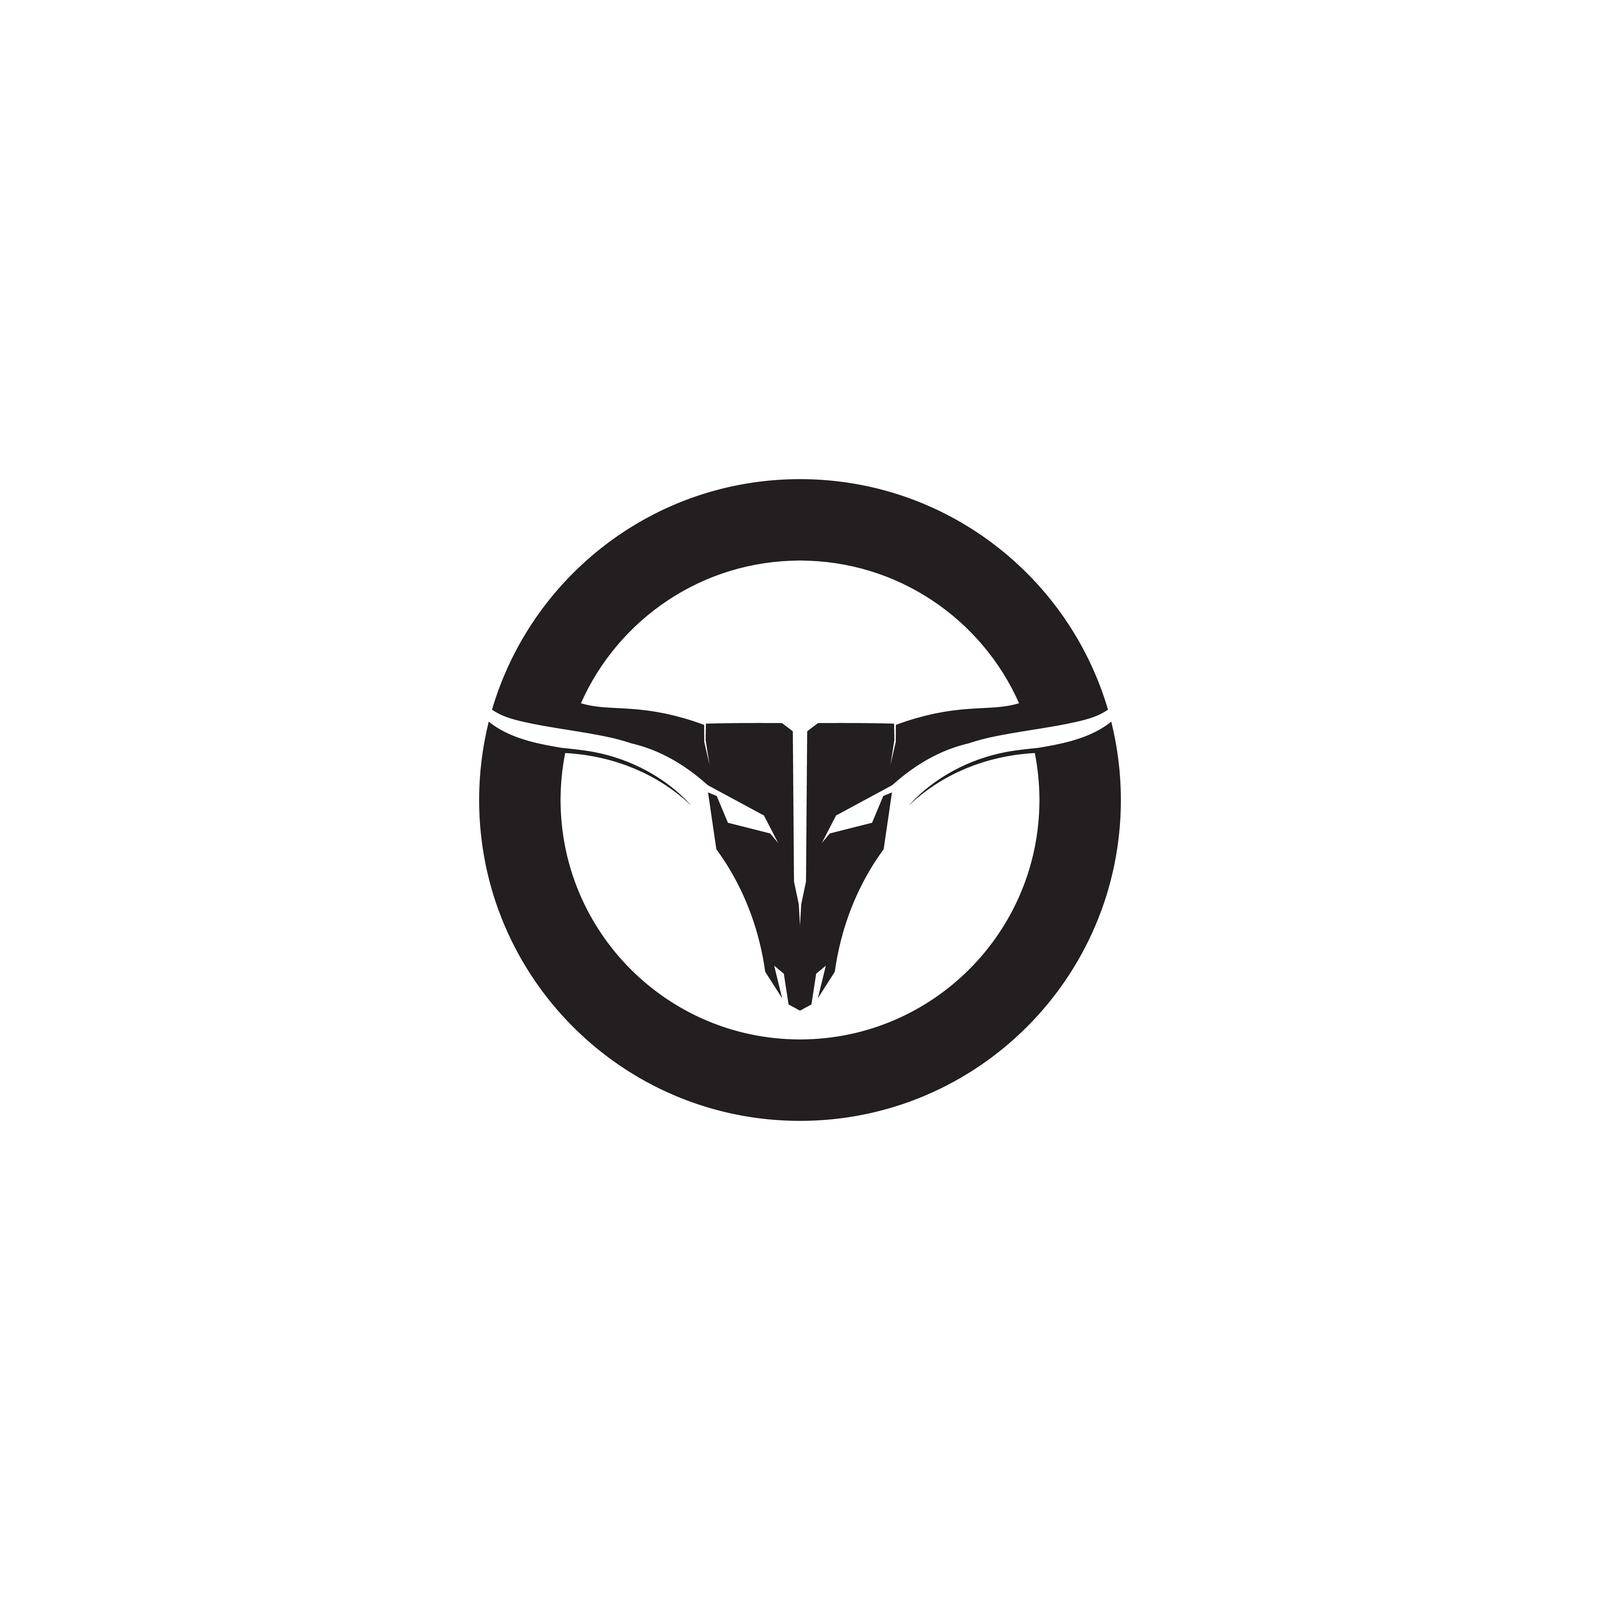 Bull horn logo and symbols template icons app vector by Anggasaputro